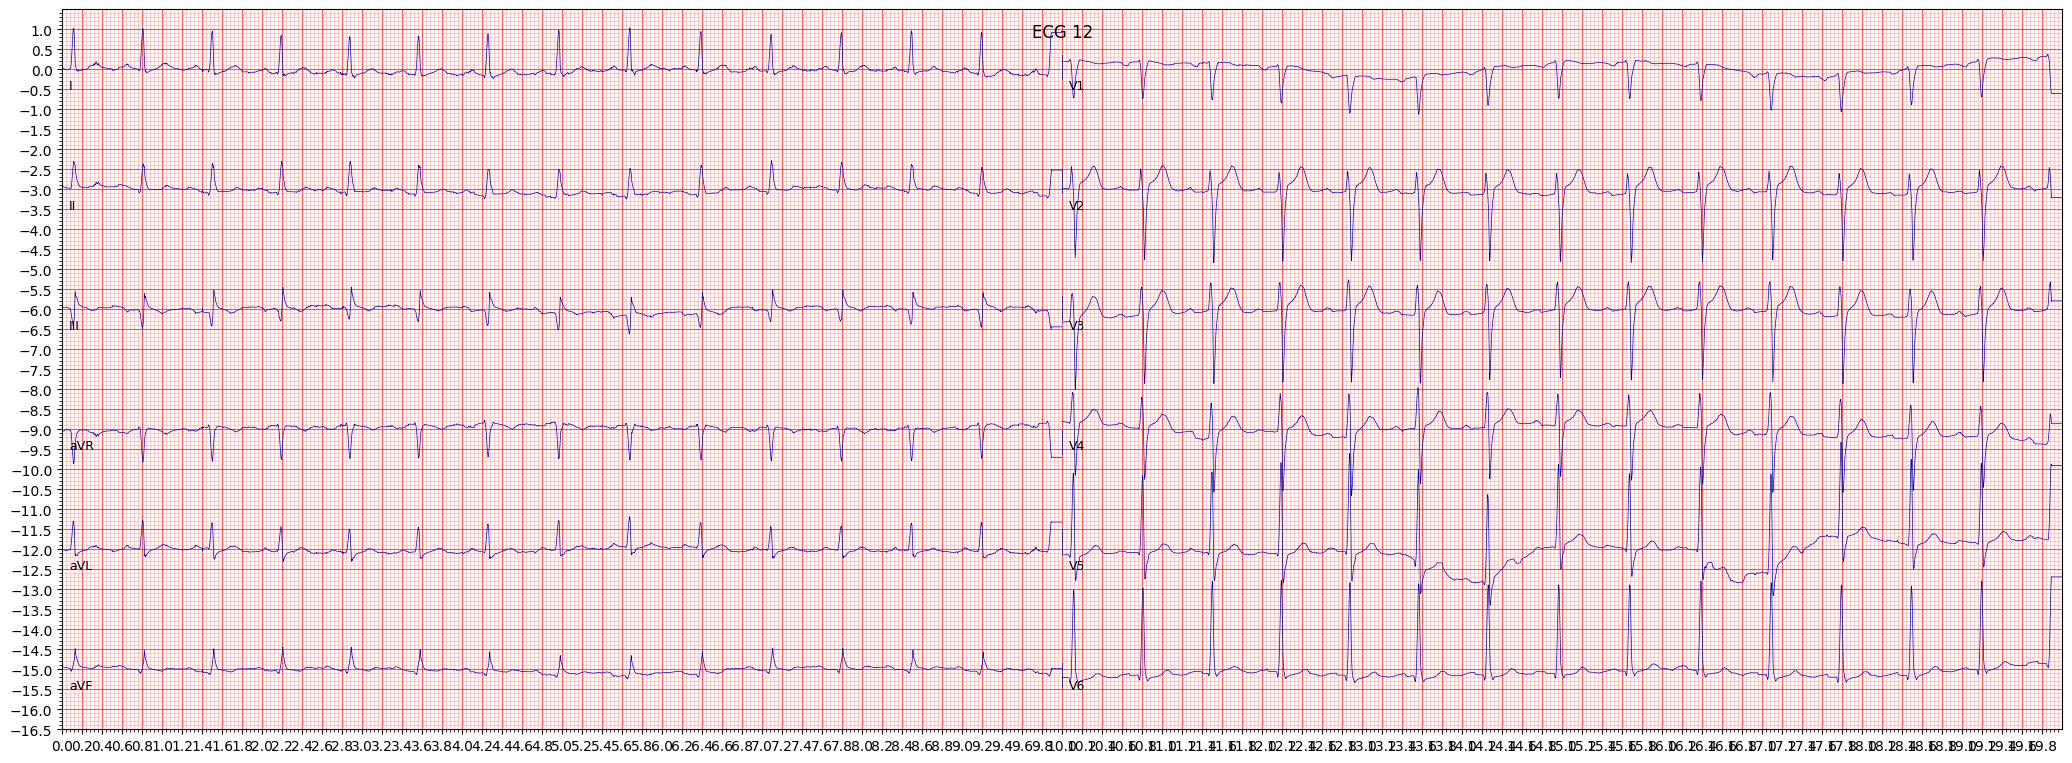 inferior myocardial infarction (IMI) example 2134